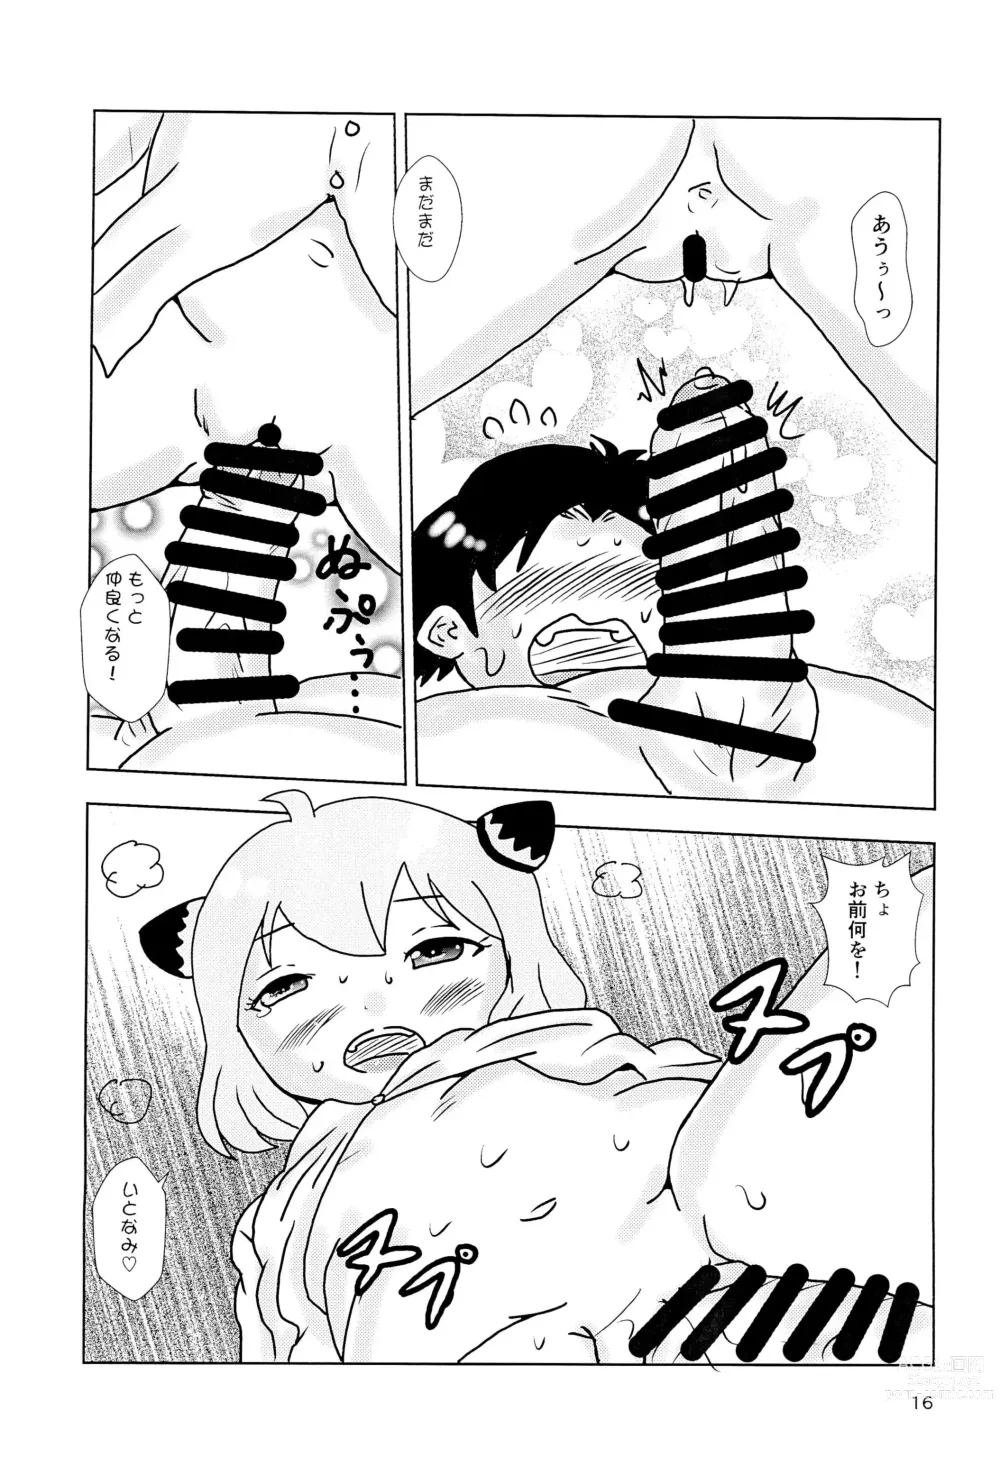 Page 16 of doujinshi Spys Girls